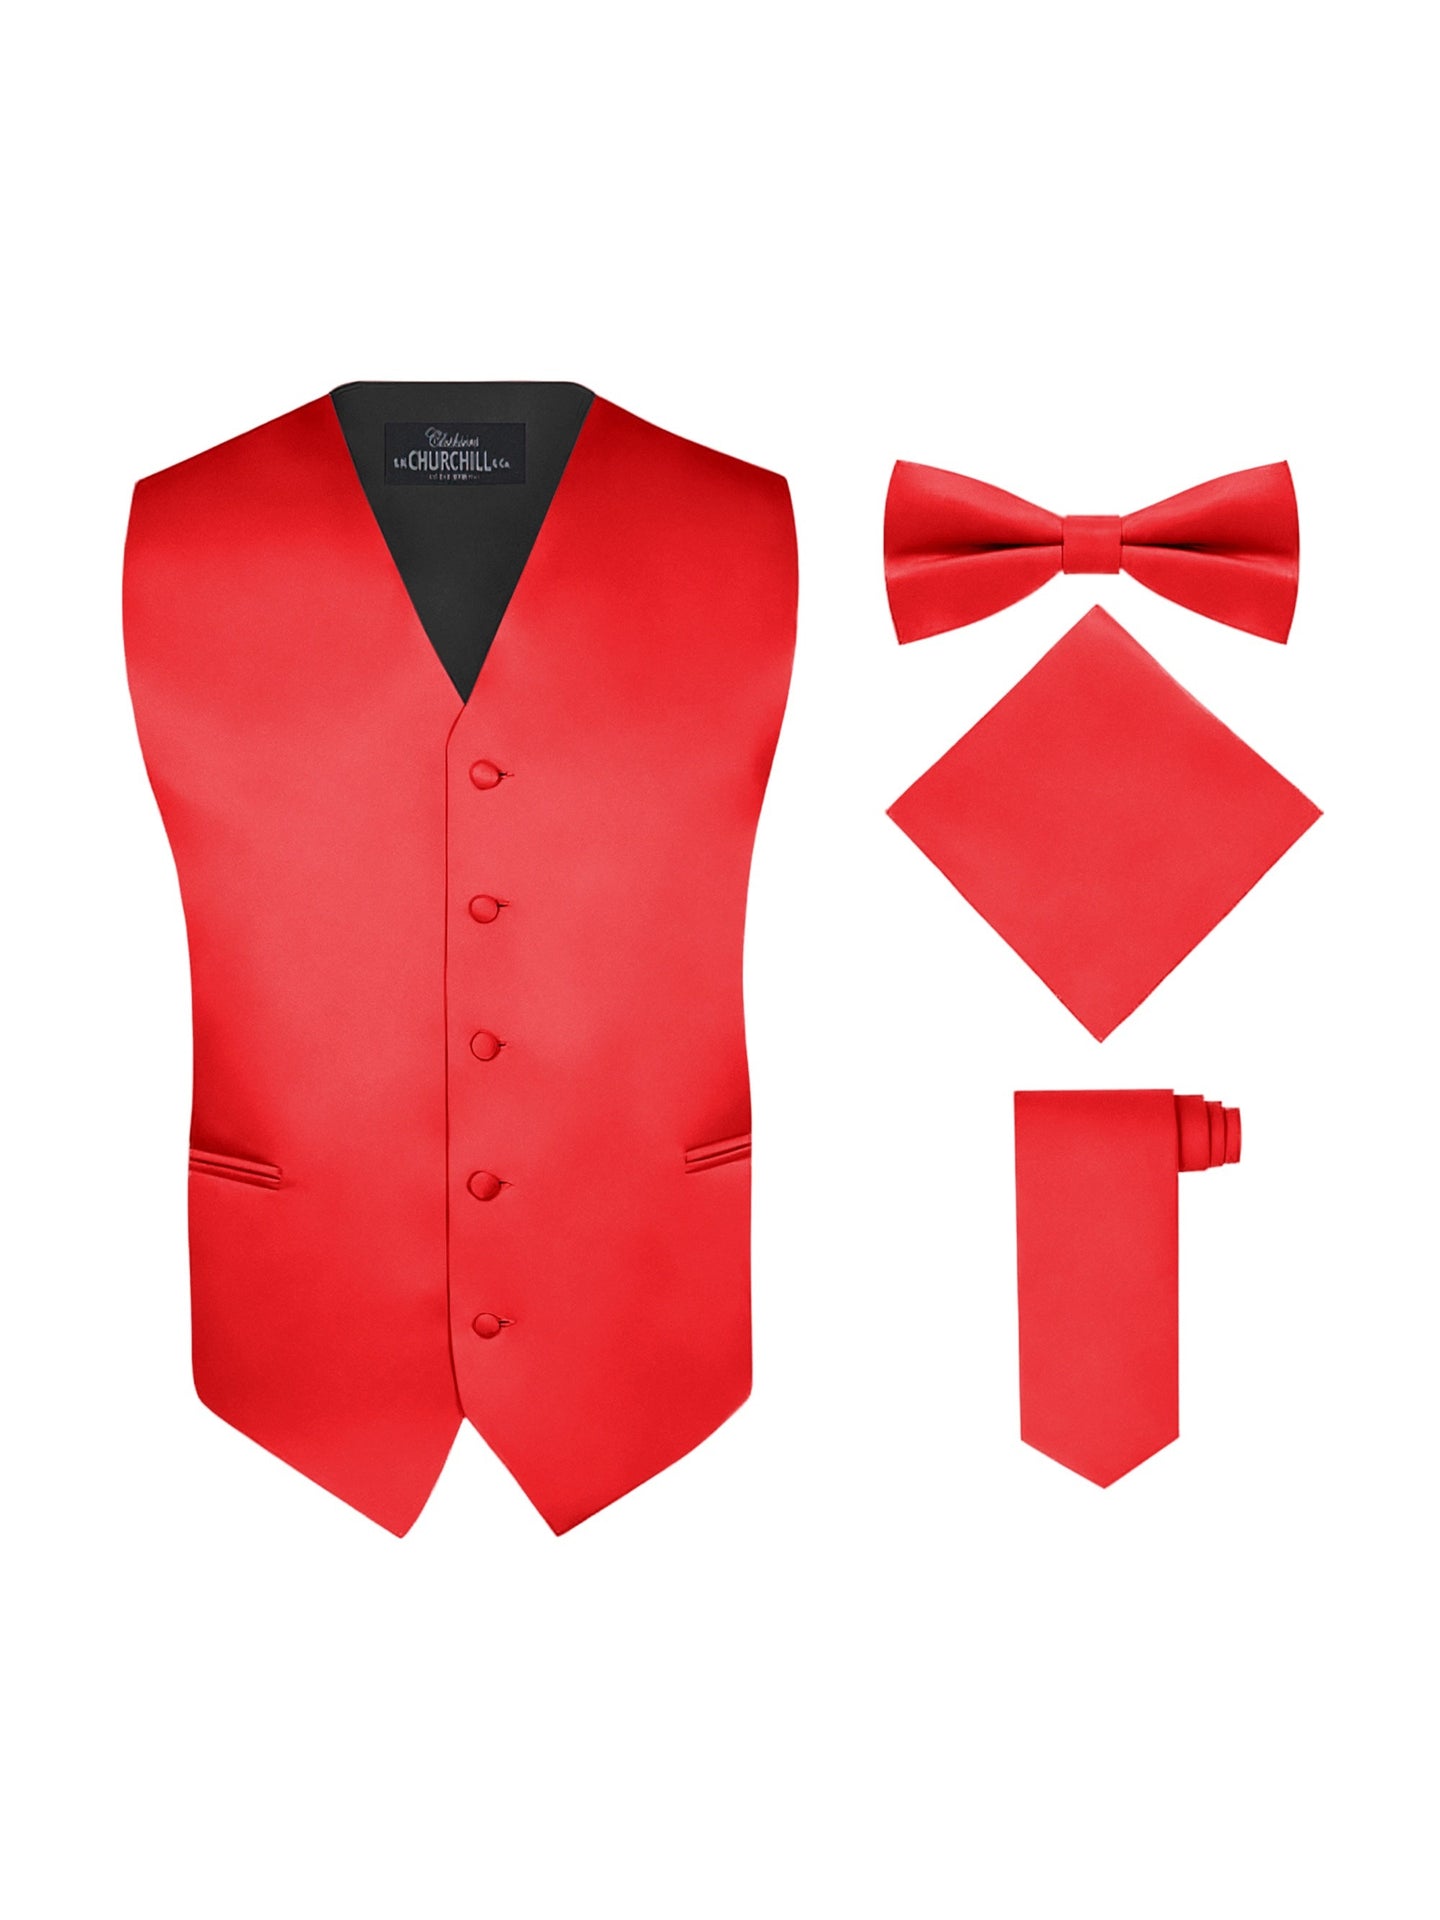 S.H. Churchill & Co. Men's 4 Piece Red Vest Set, with Bow Tie, Neck Tie & Pocket Hankie